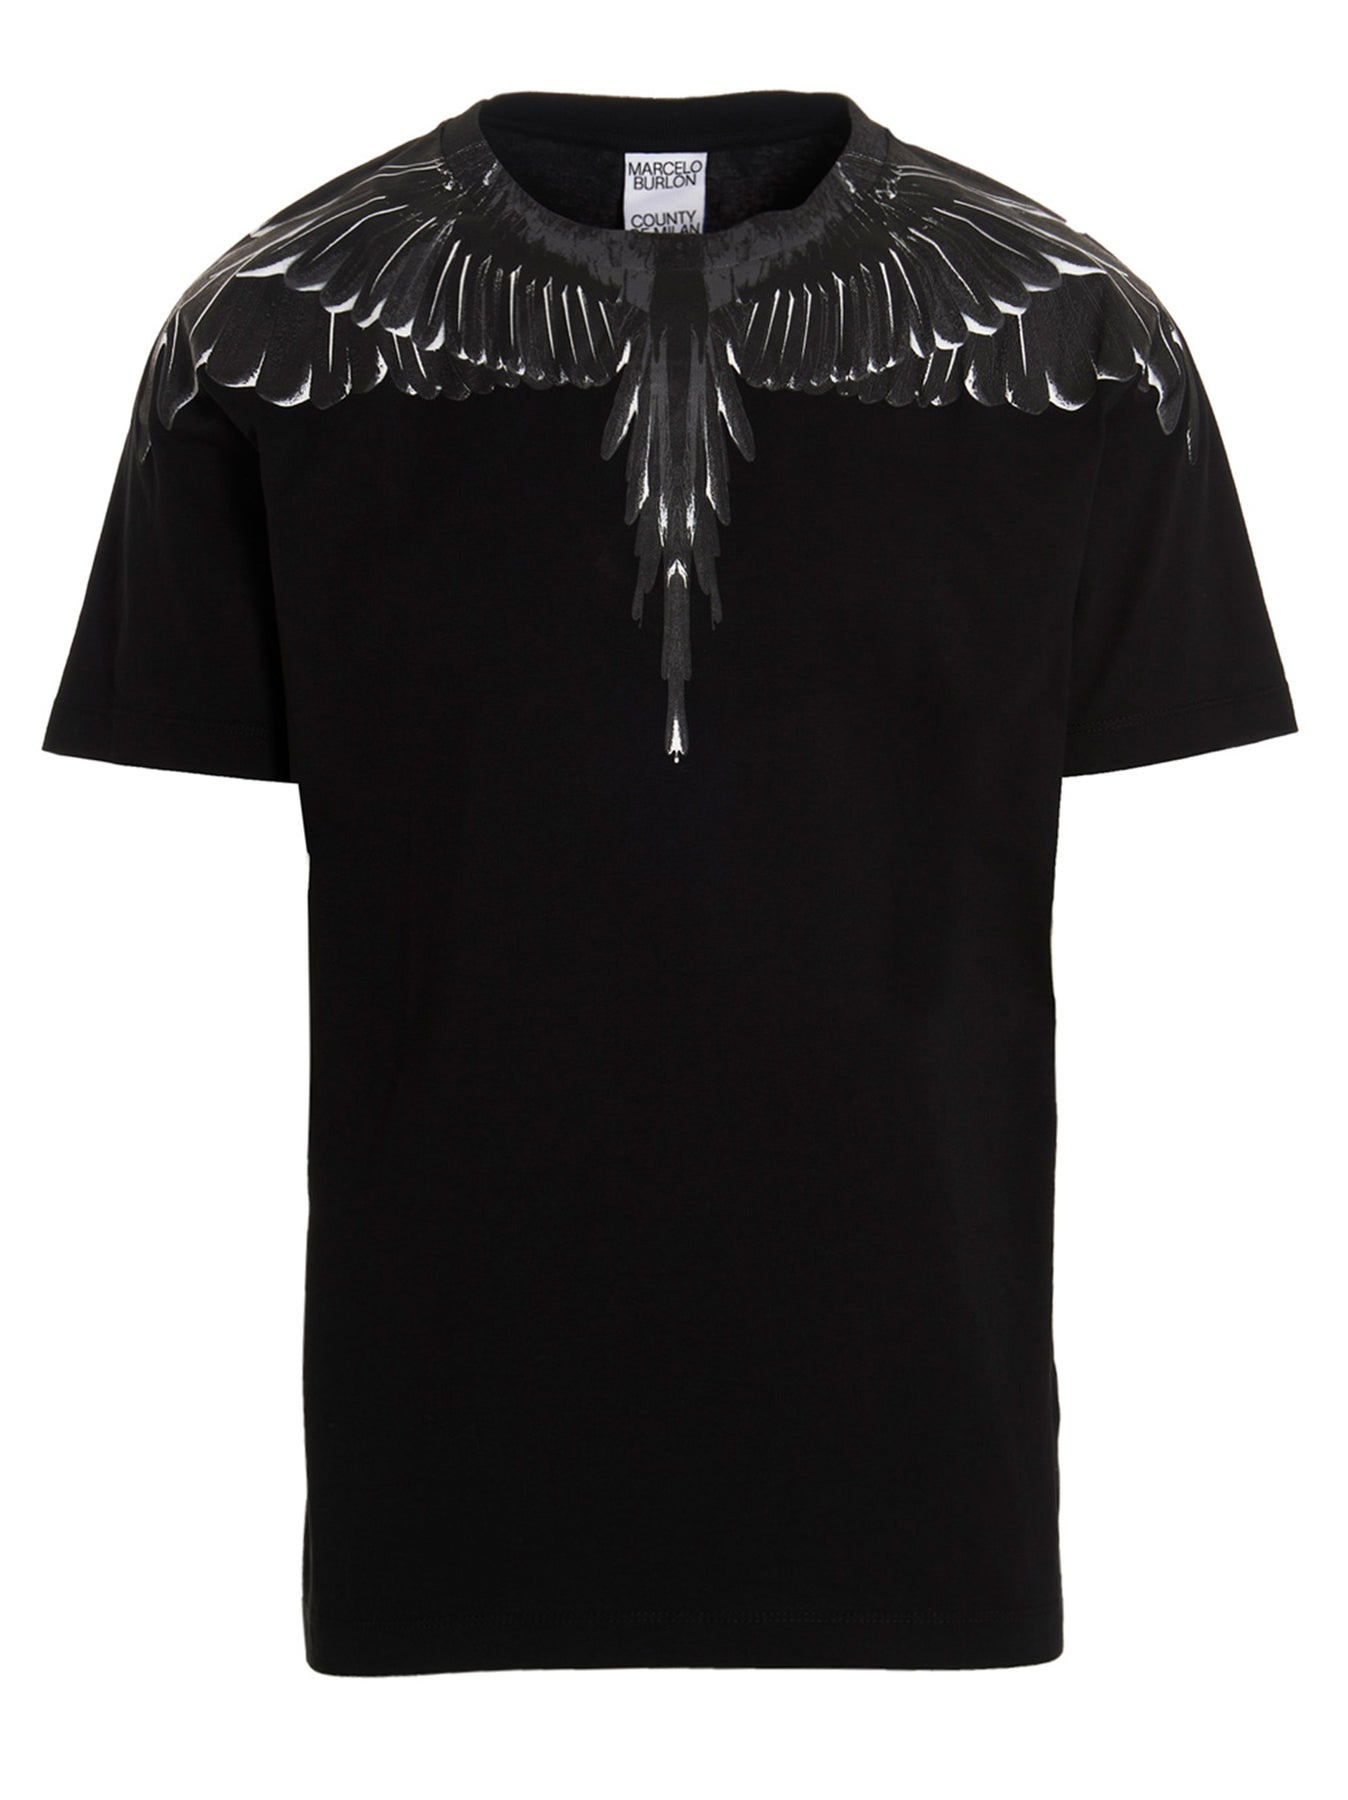 Wings T-Shirt Black - 1